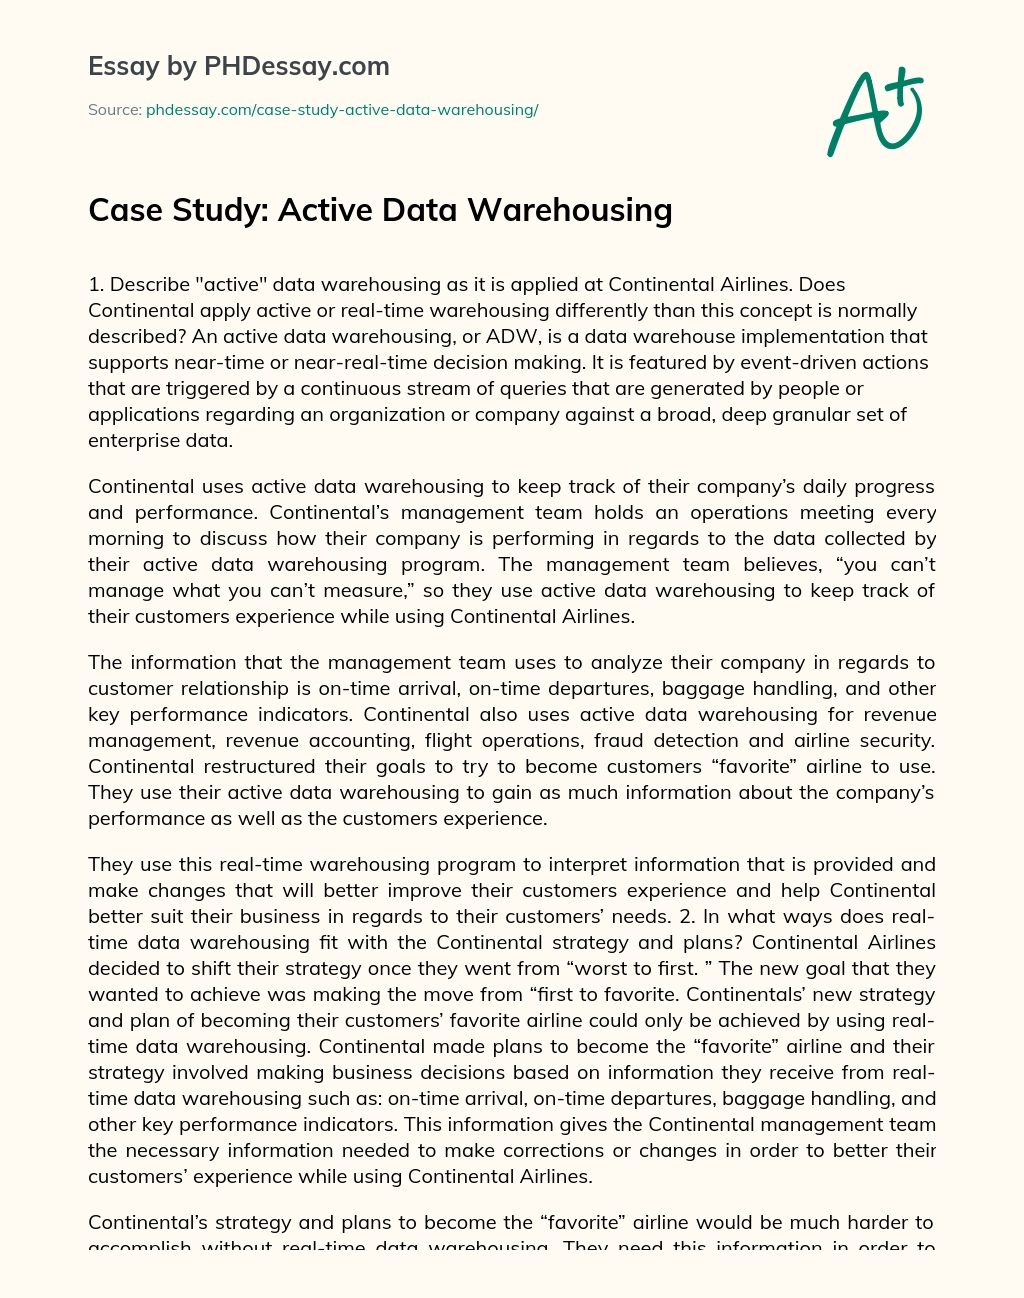 Case Study: Active Data Warehousing essay